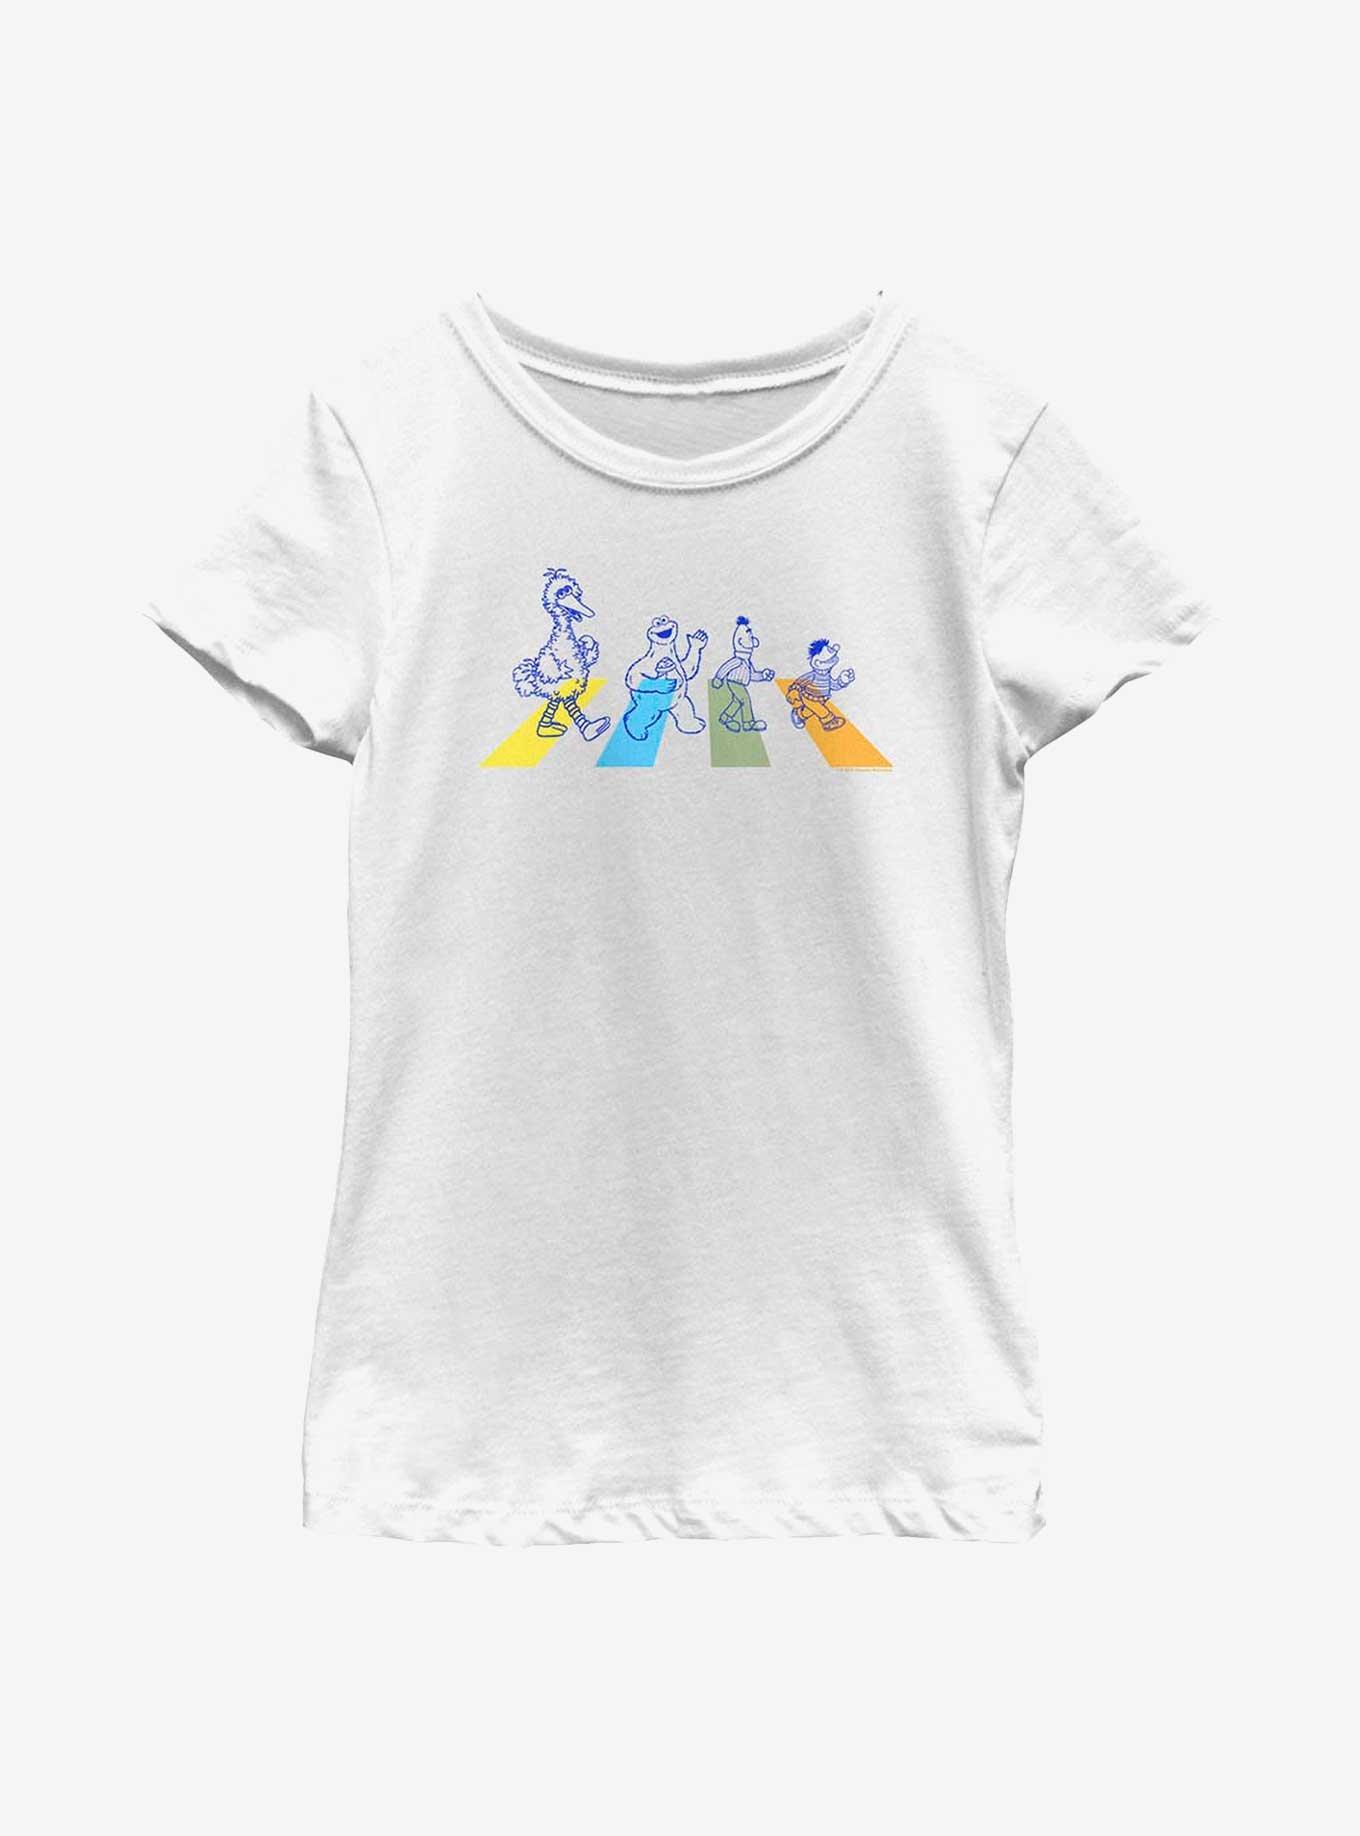 Sesame Street Team Abbey Road Youth Girls T-Shirt, WHITE, hi-res